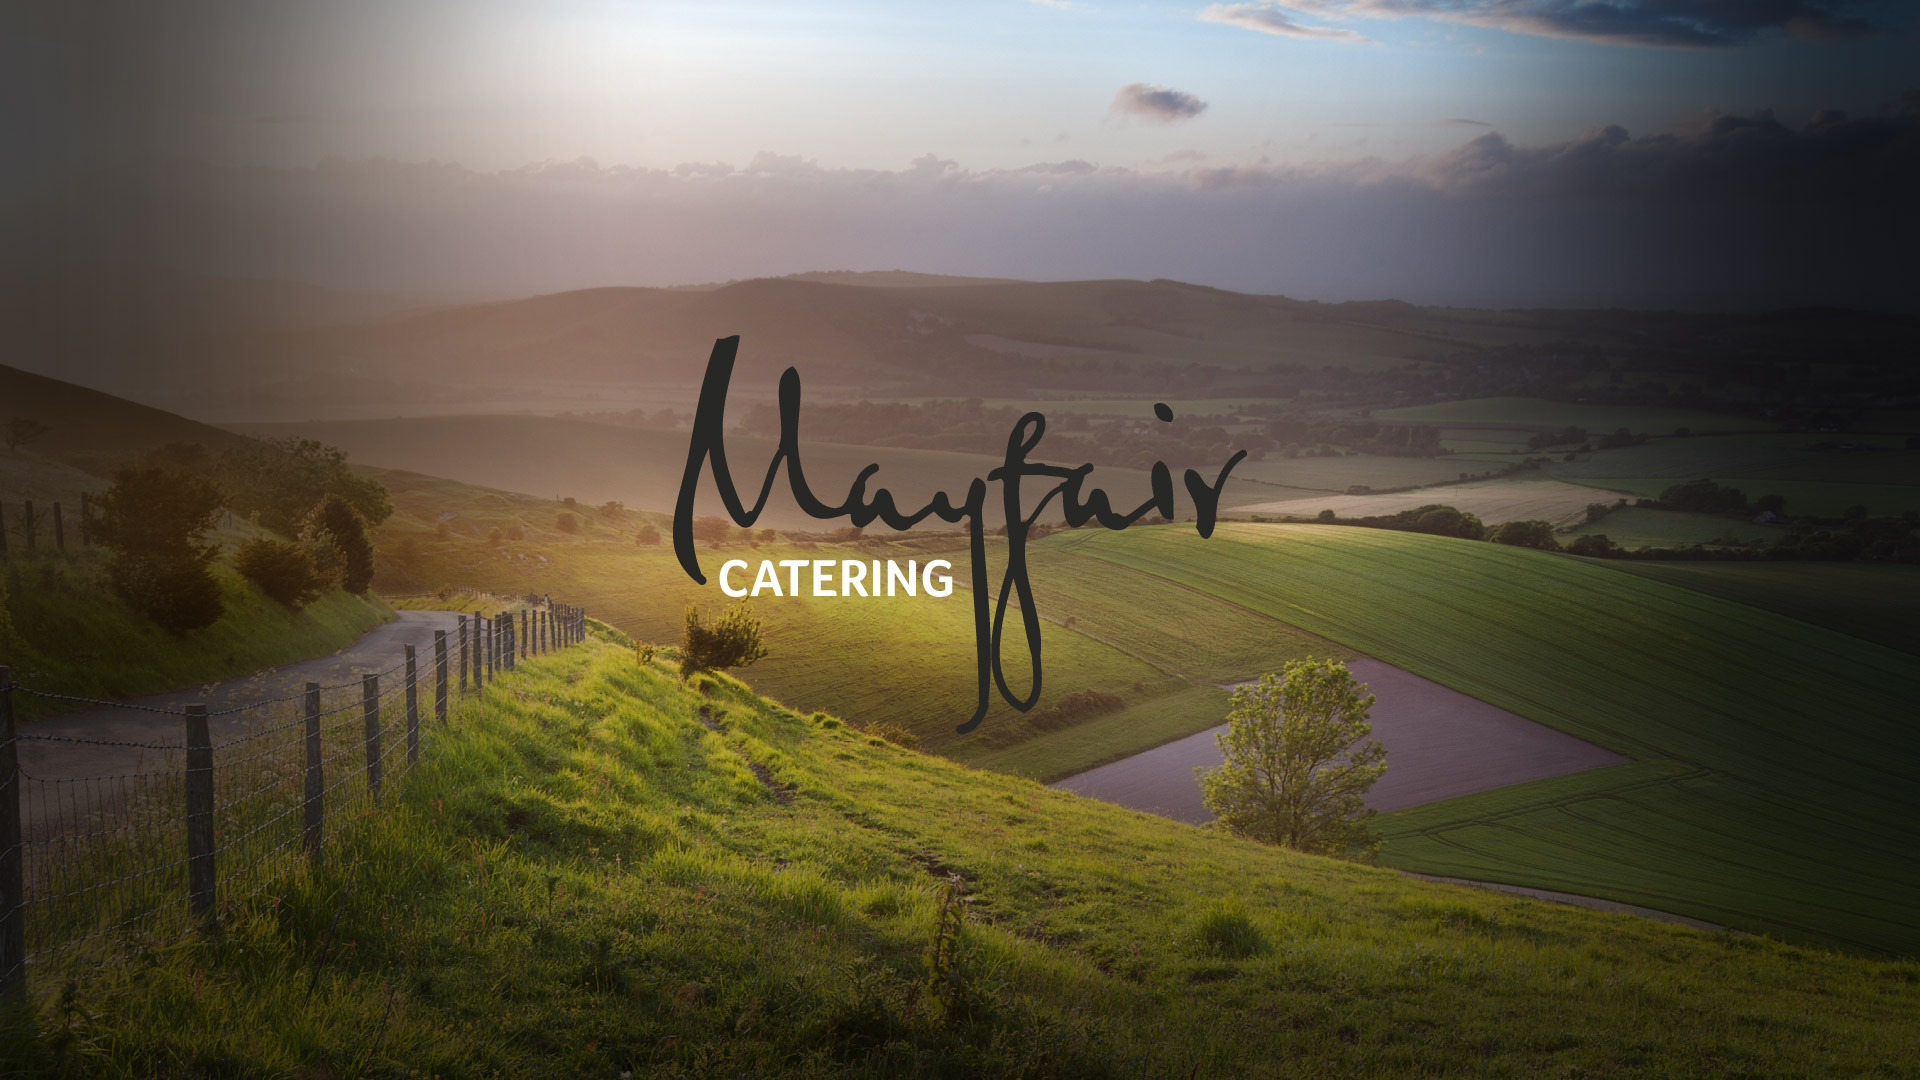 Catering company website design